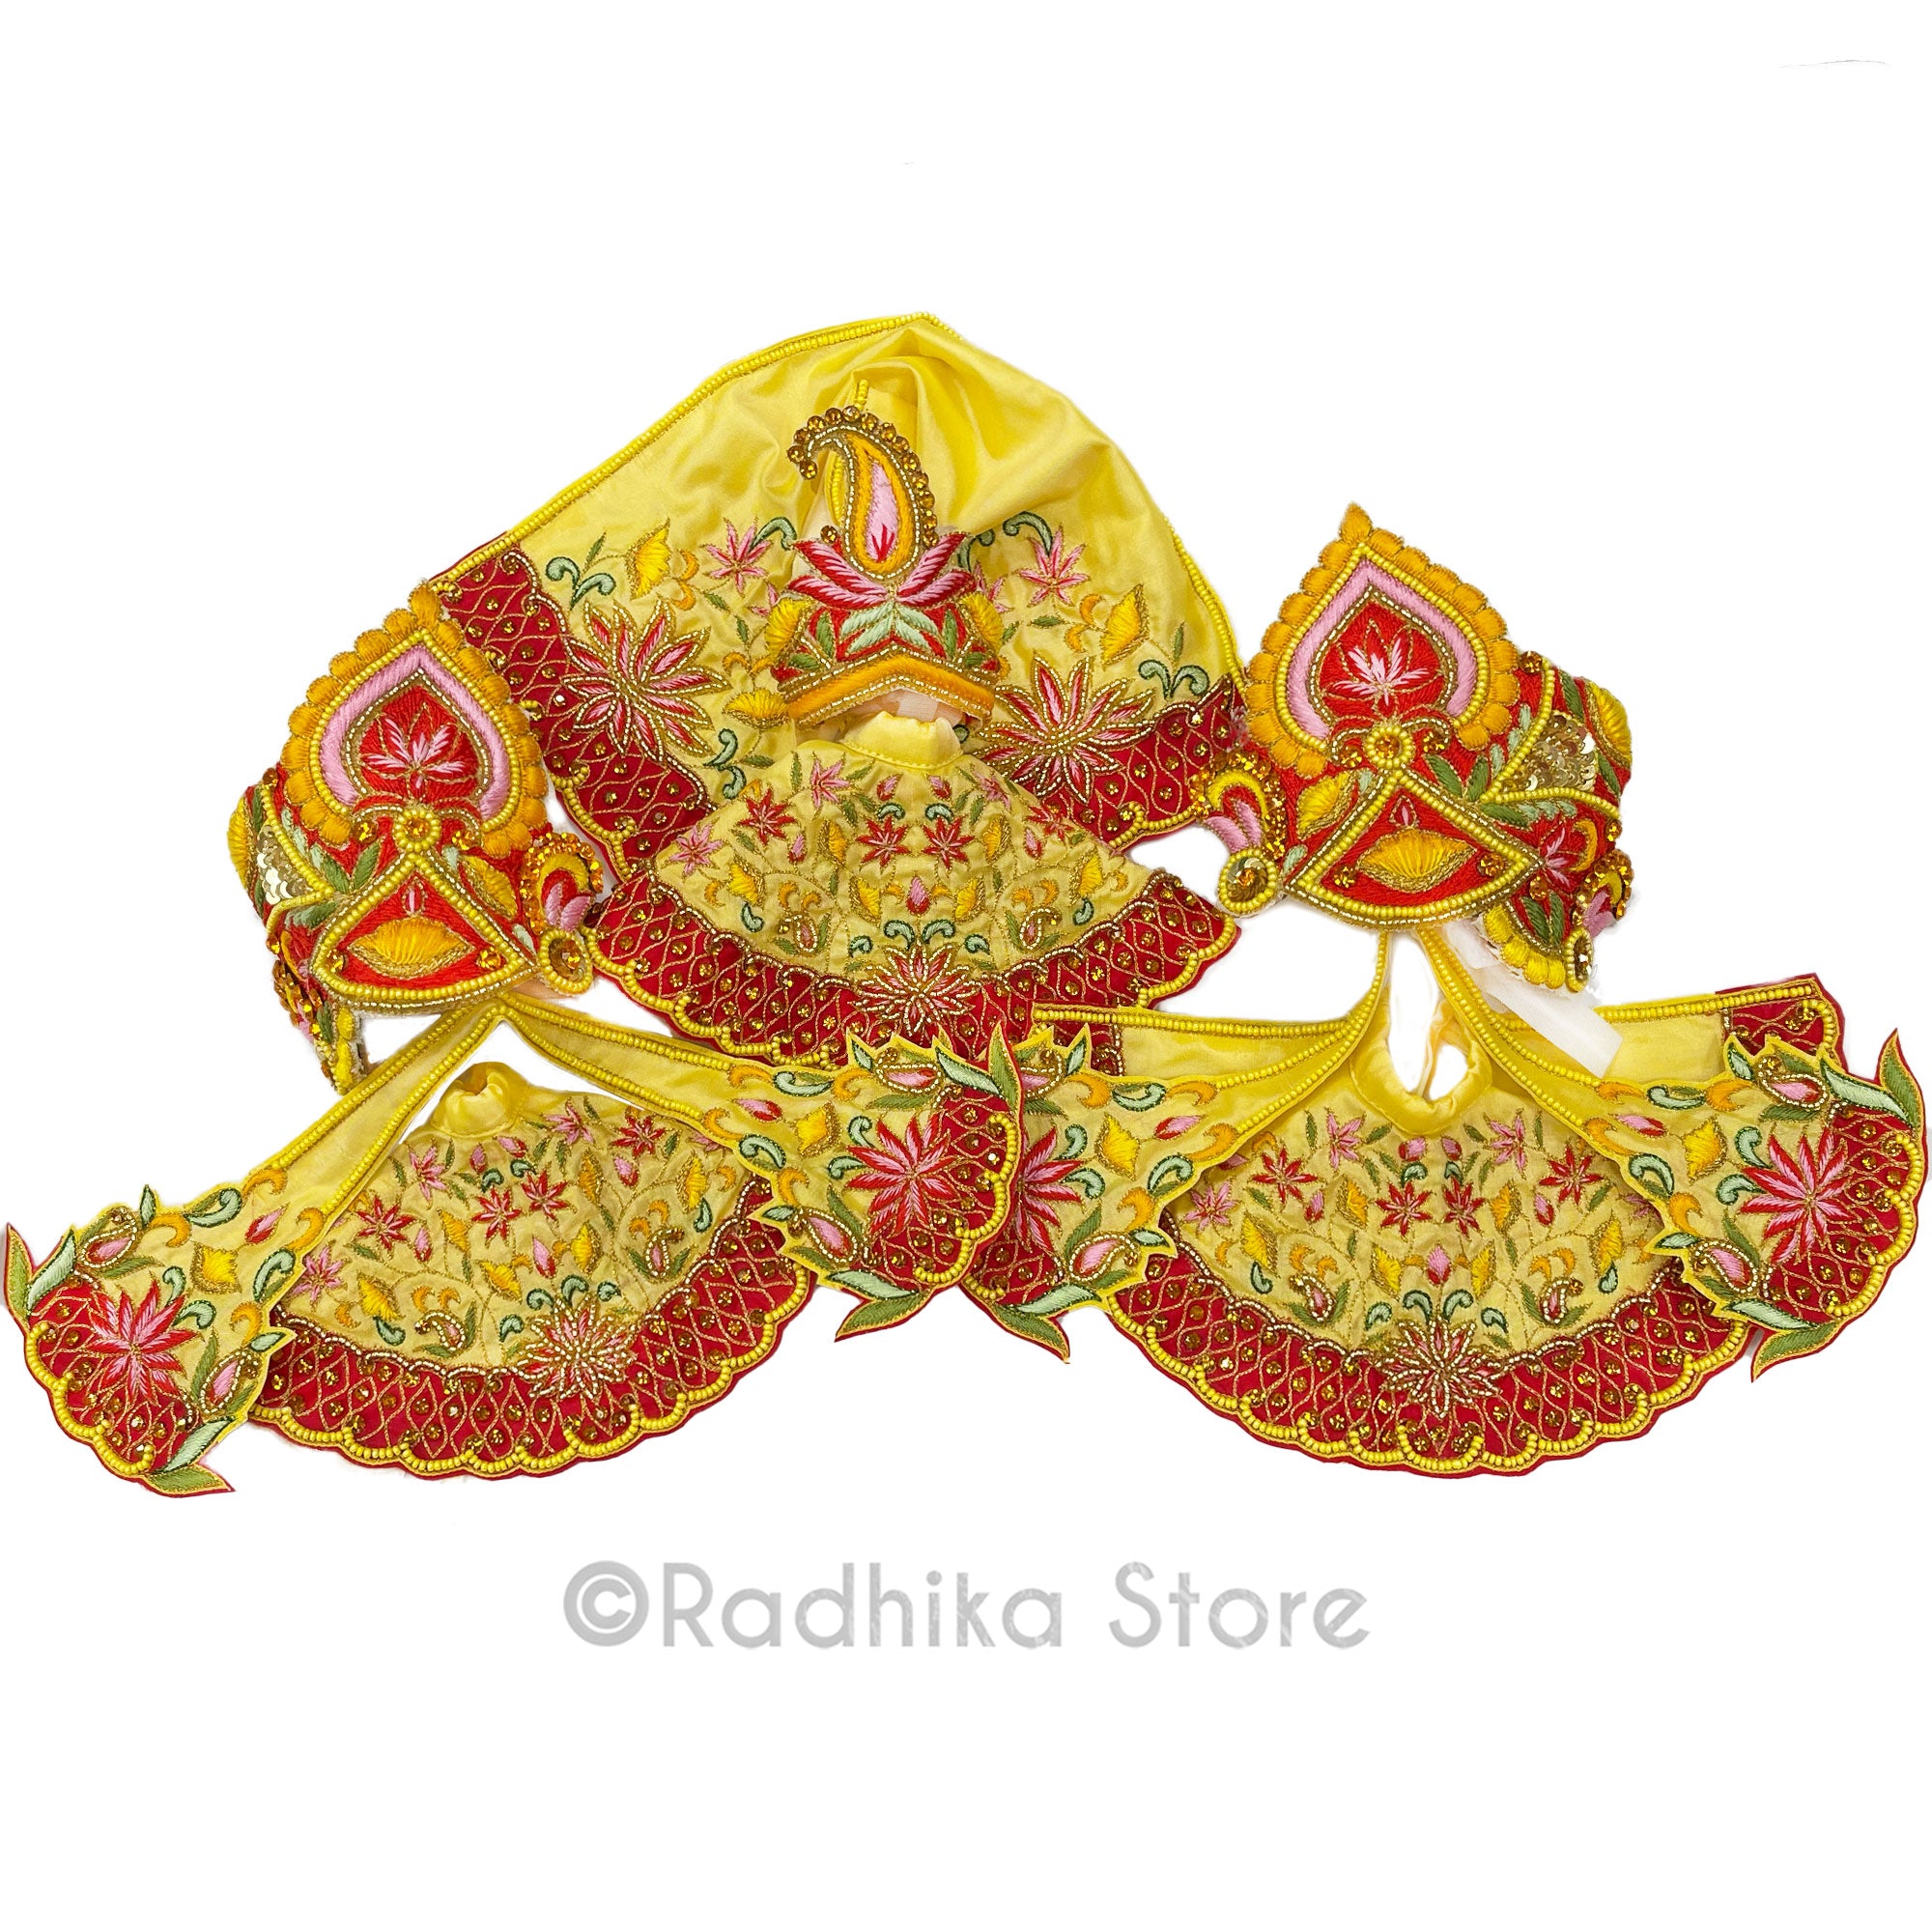 Festival Mayapur Lotus Fountain - Red and Yellow - Silk - Jagannath Baladeva Subhadra Deity Outfit